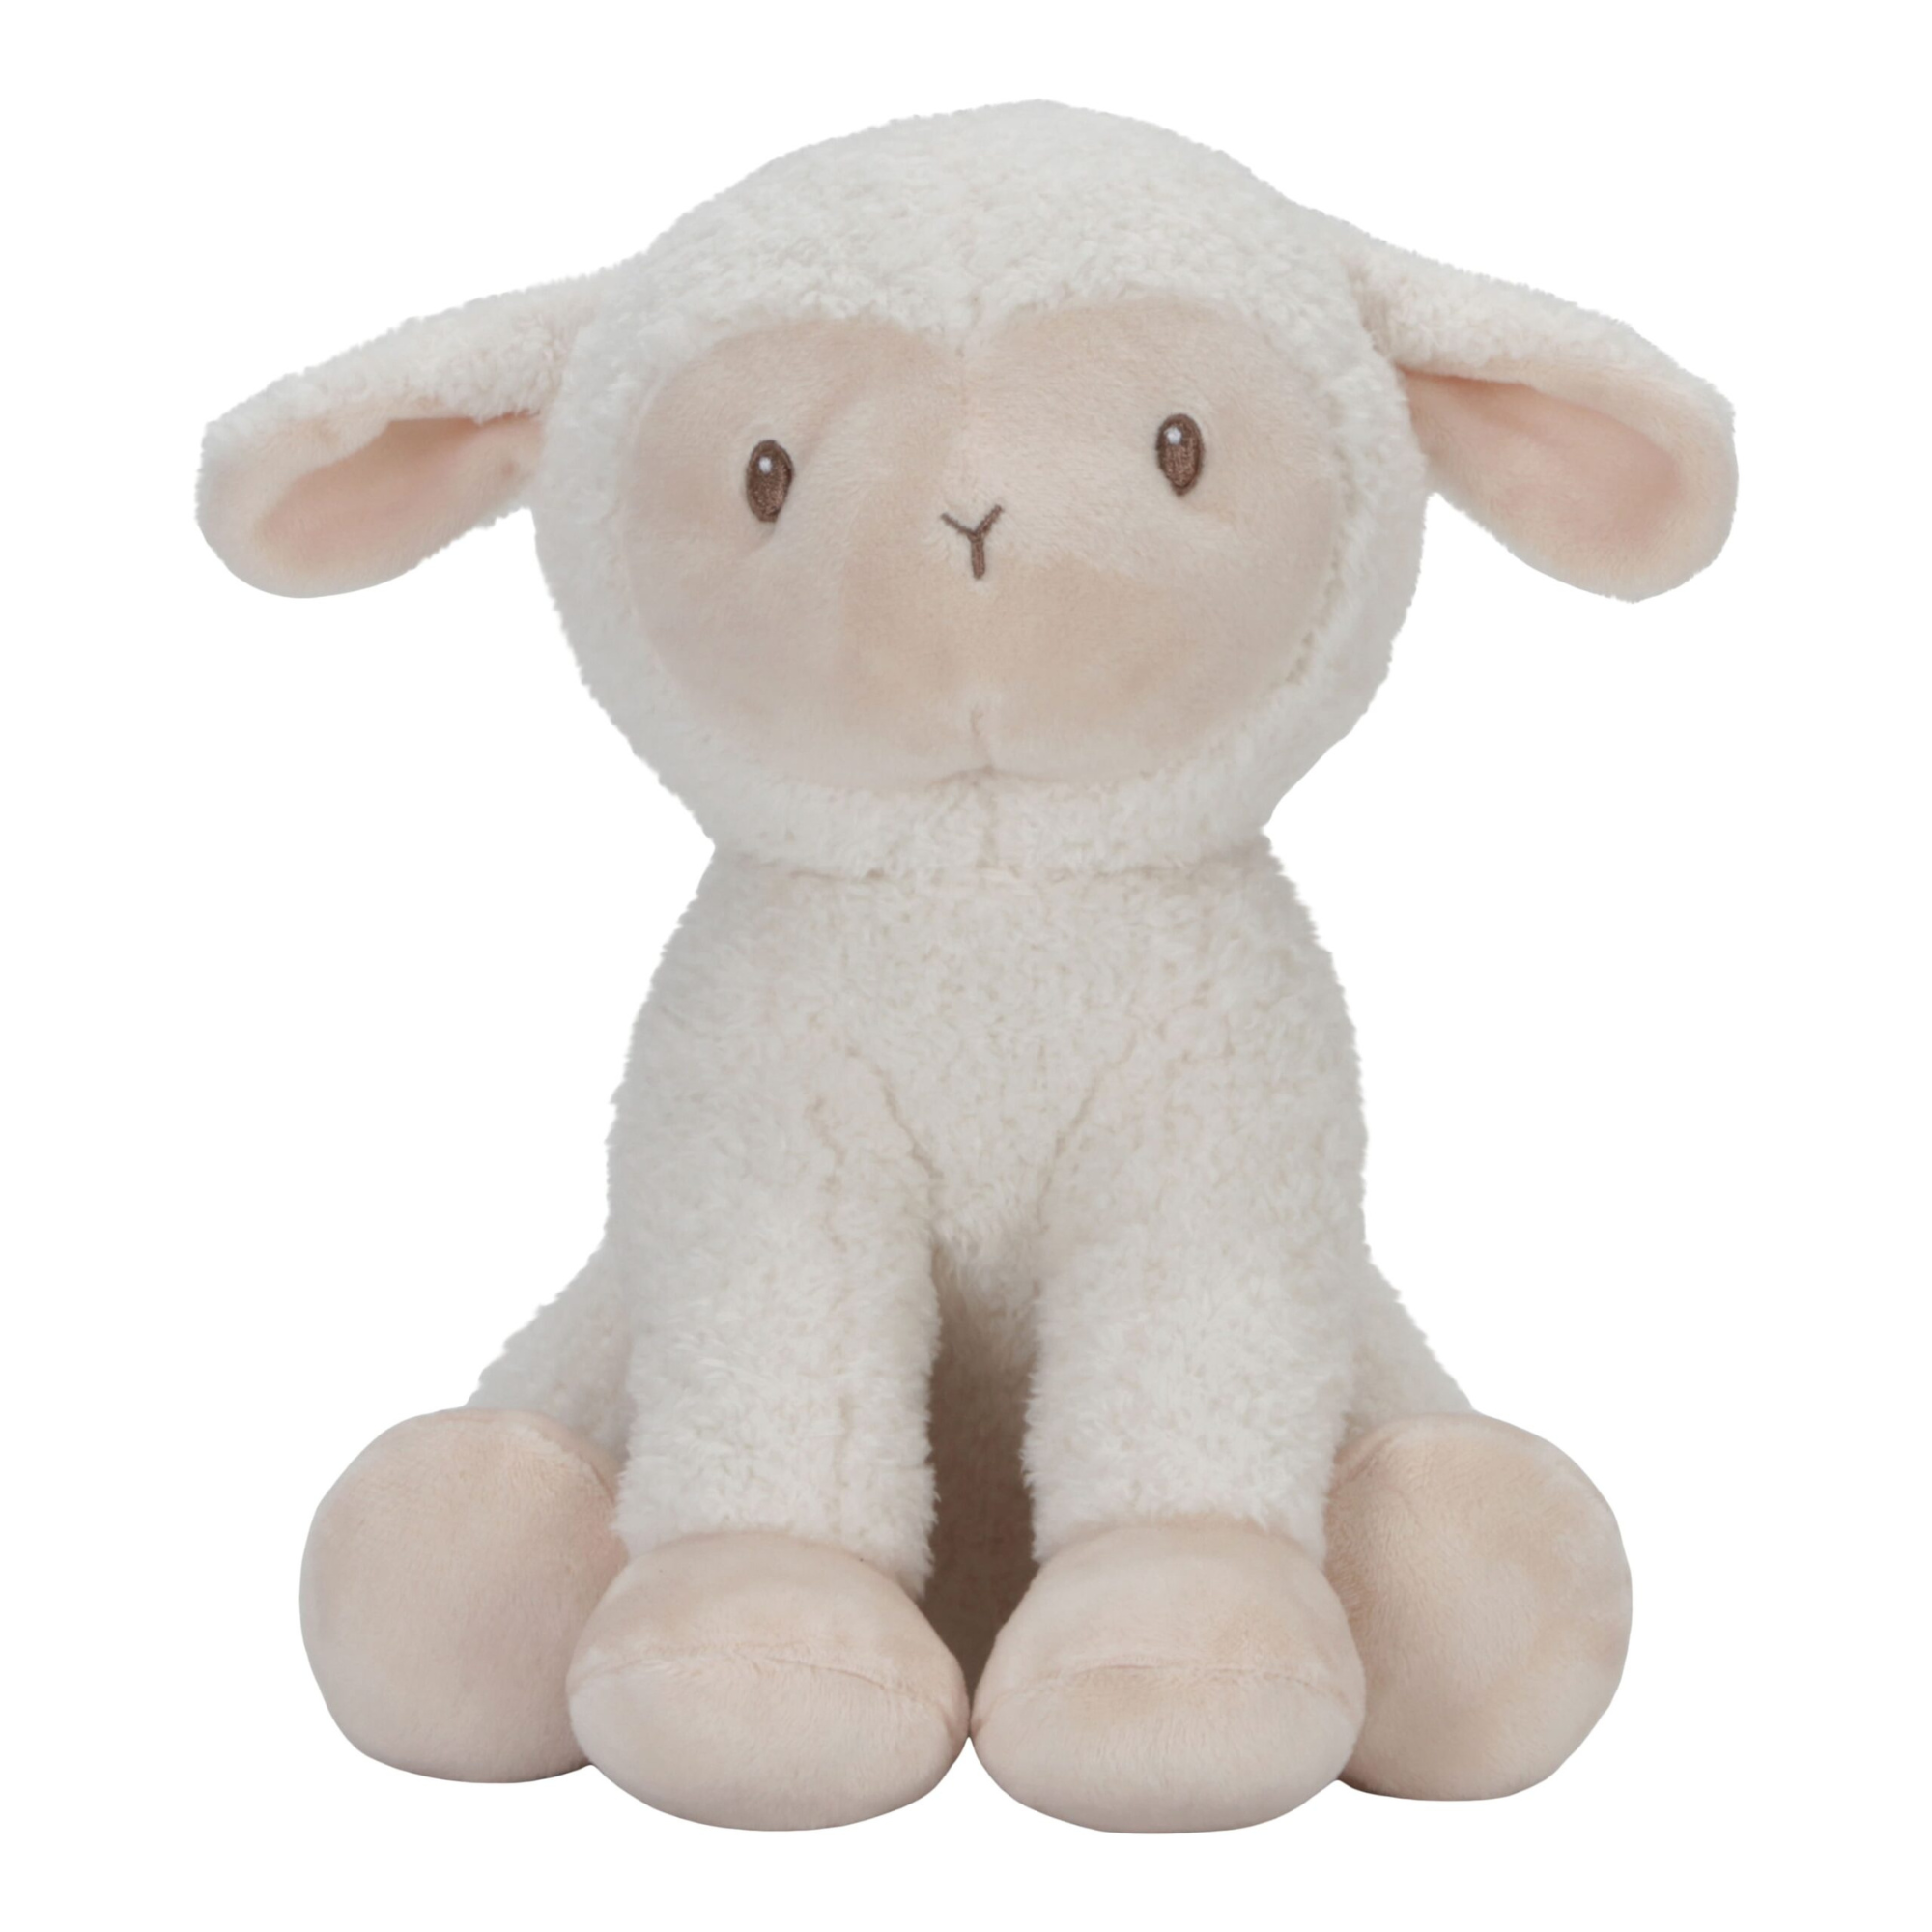 Plush sheep - Sheep 15 cm